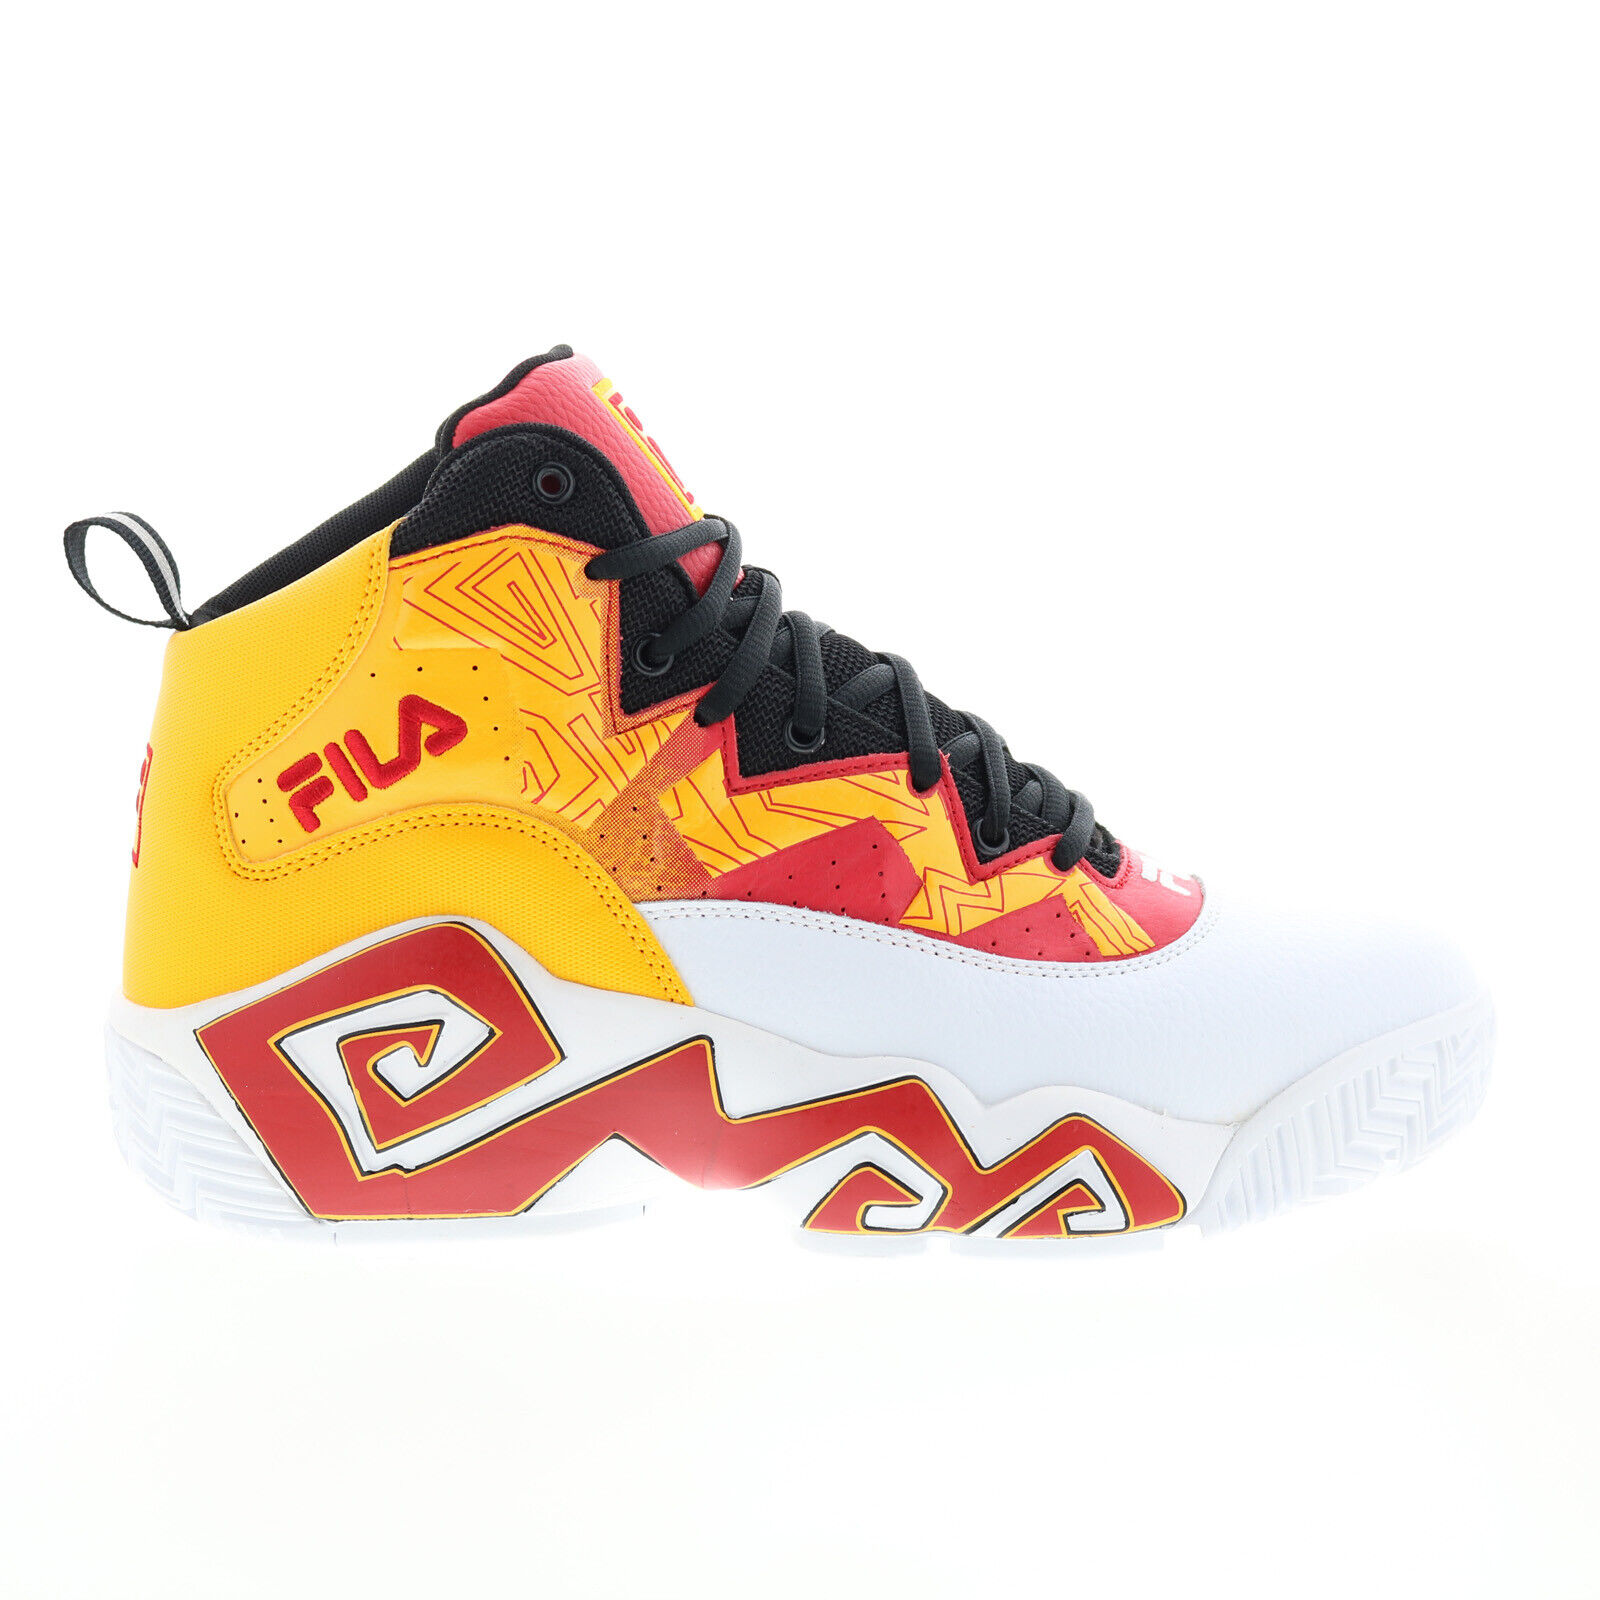 Interesting Fila MB 1BM01746-123 Mens White Leather Athletic Basketball Shoes on eBay